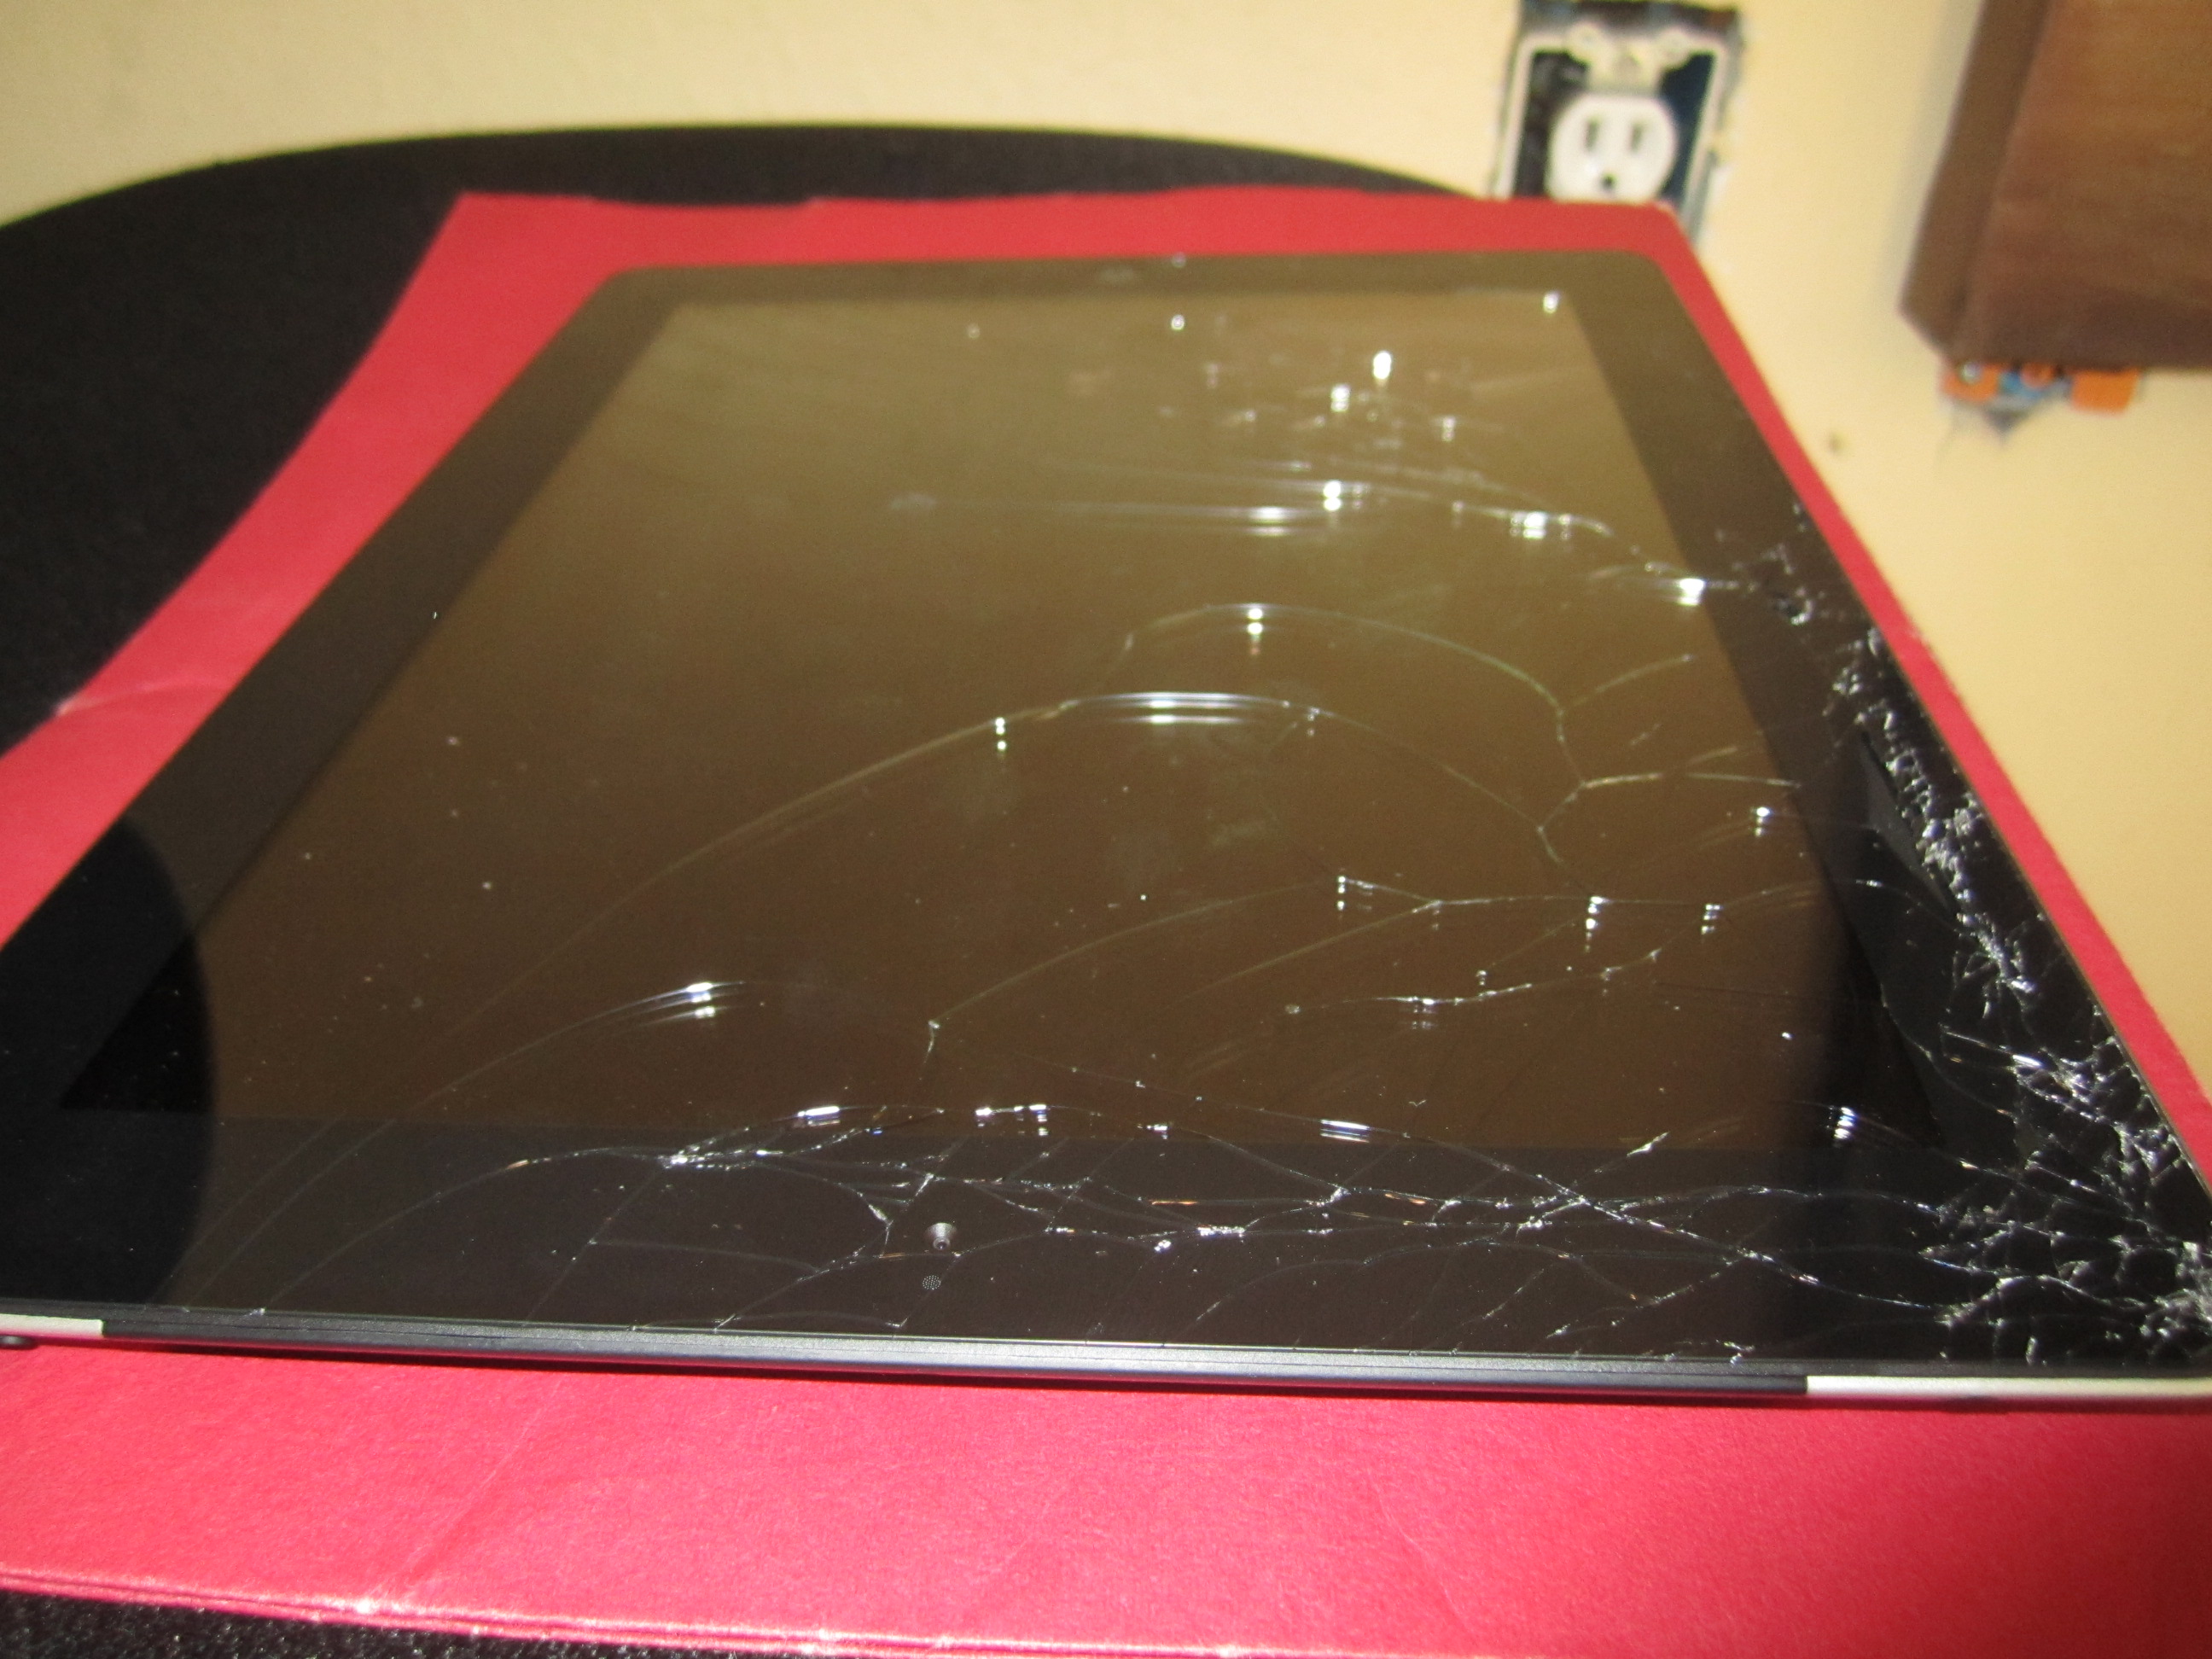 Ipad 2 Glass Screen Cracked